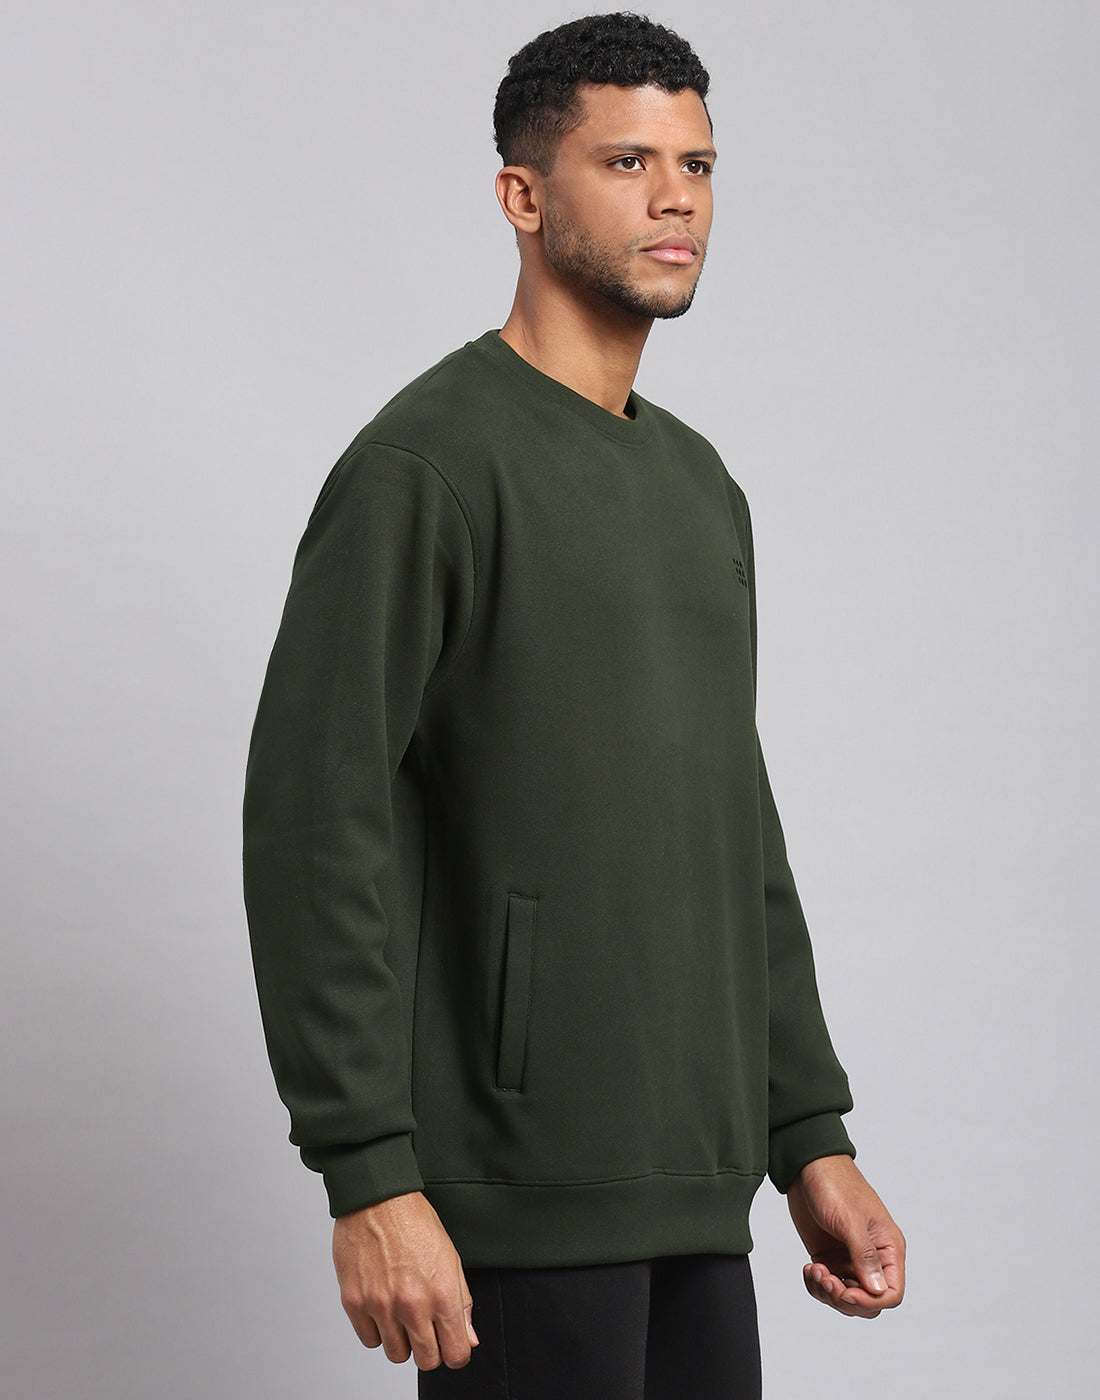 Men Olive Solid Round Neck Full Sleeve Sweatshirt